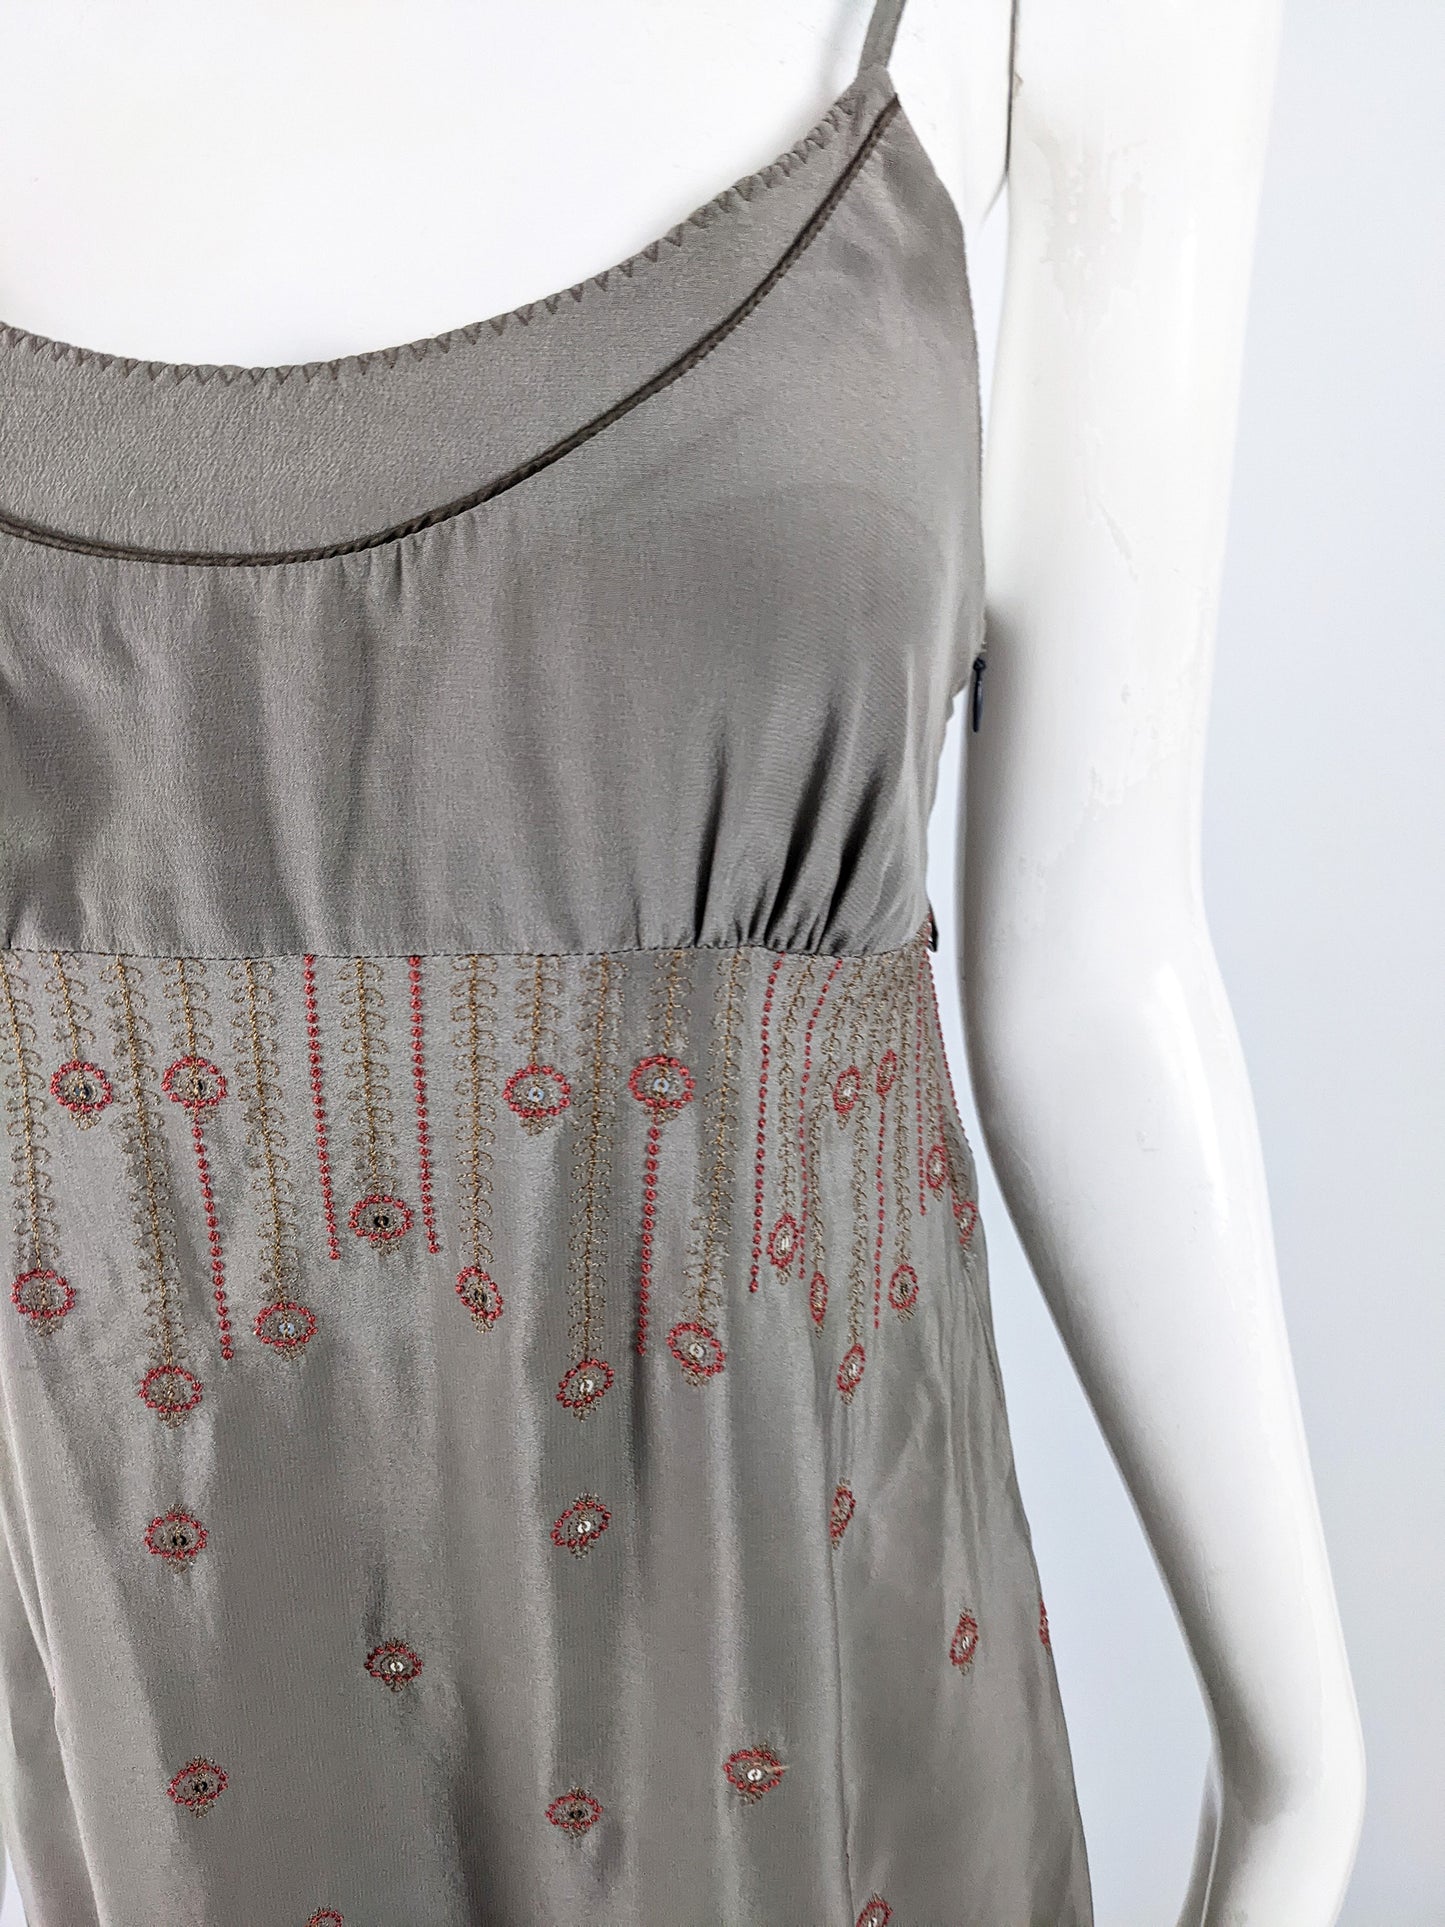 Sandro Paris Vintage y2k Taupe Silk Embroidered Dress, 2000s